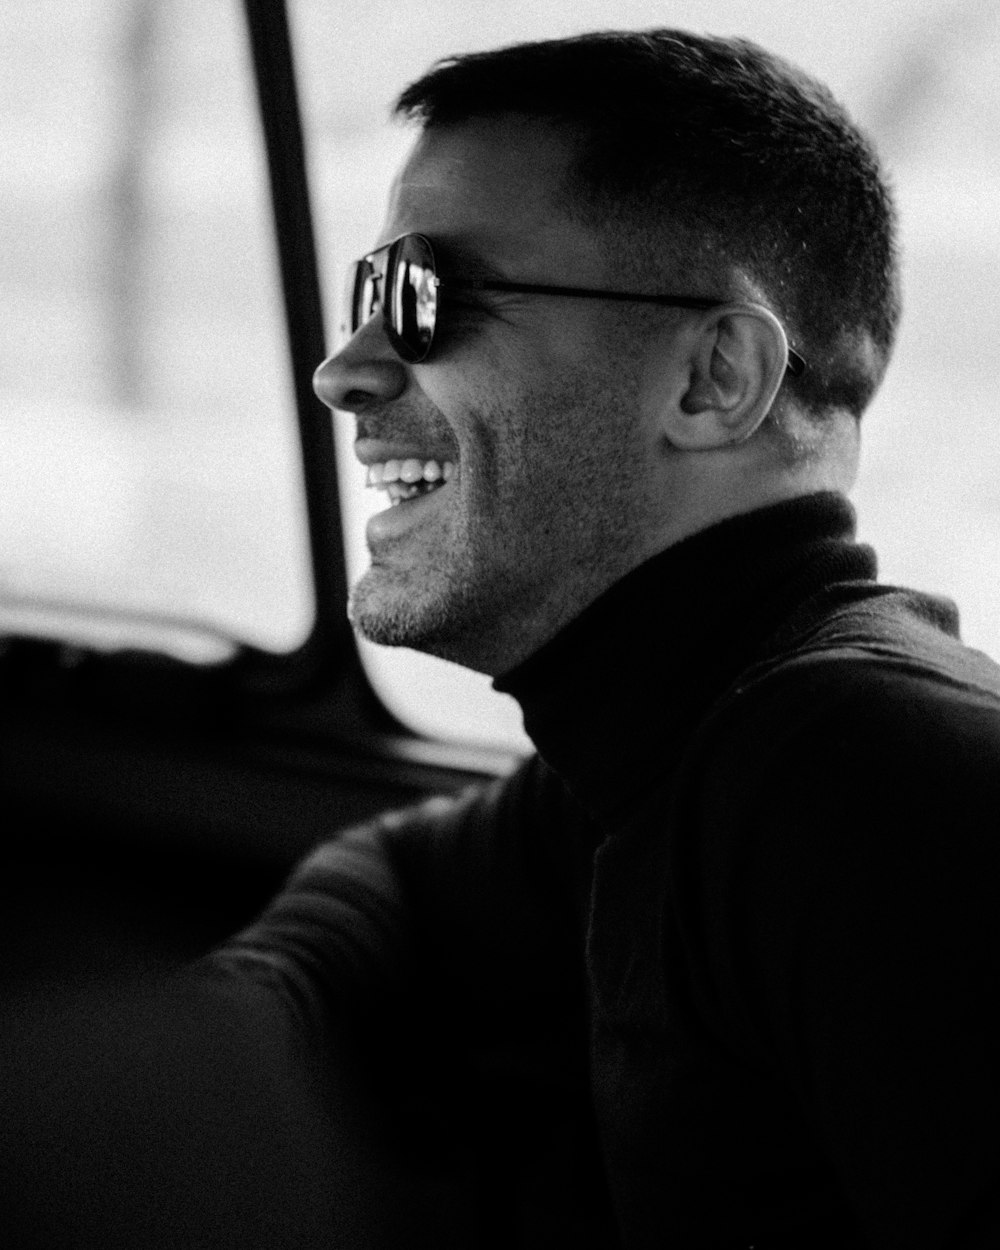 a man sitting in a car wearing sunglasses